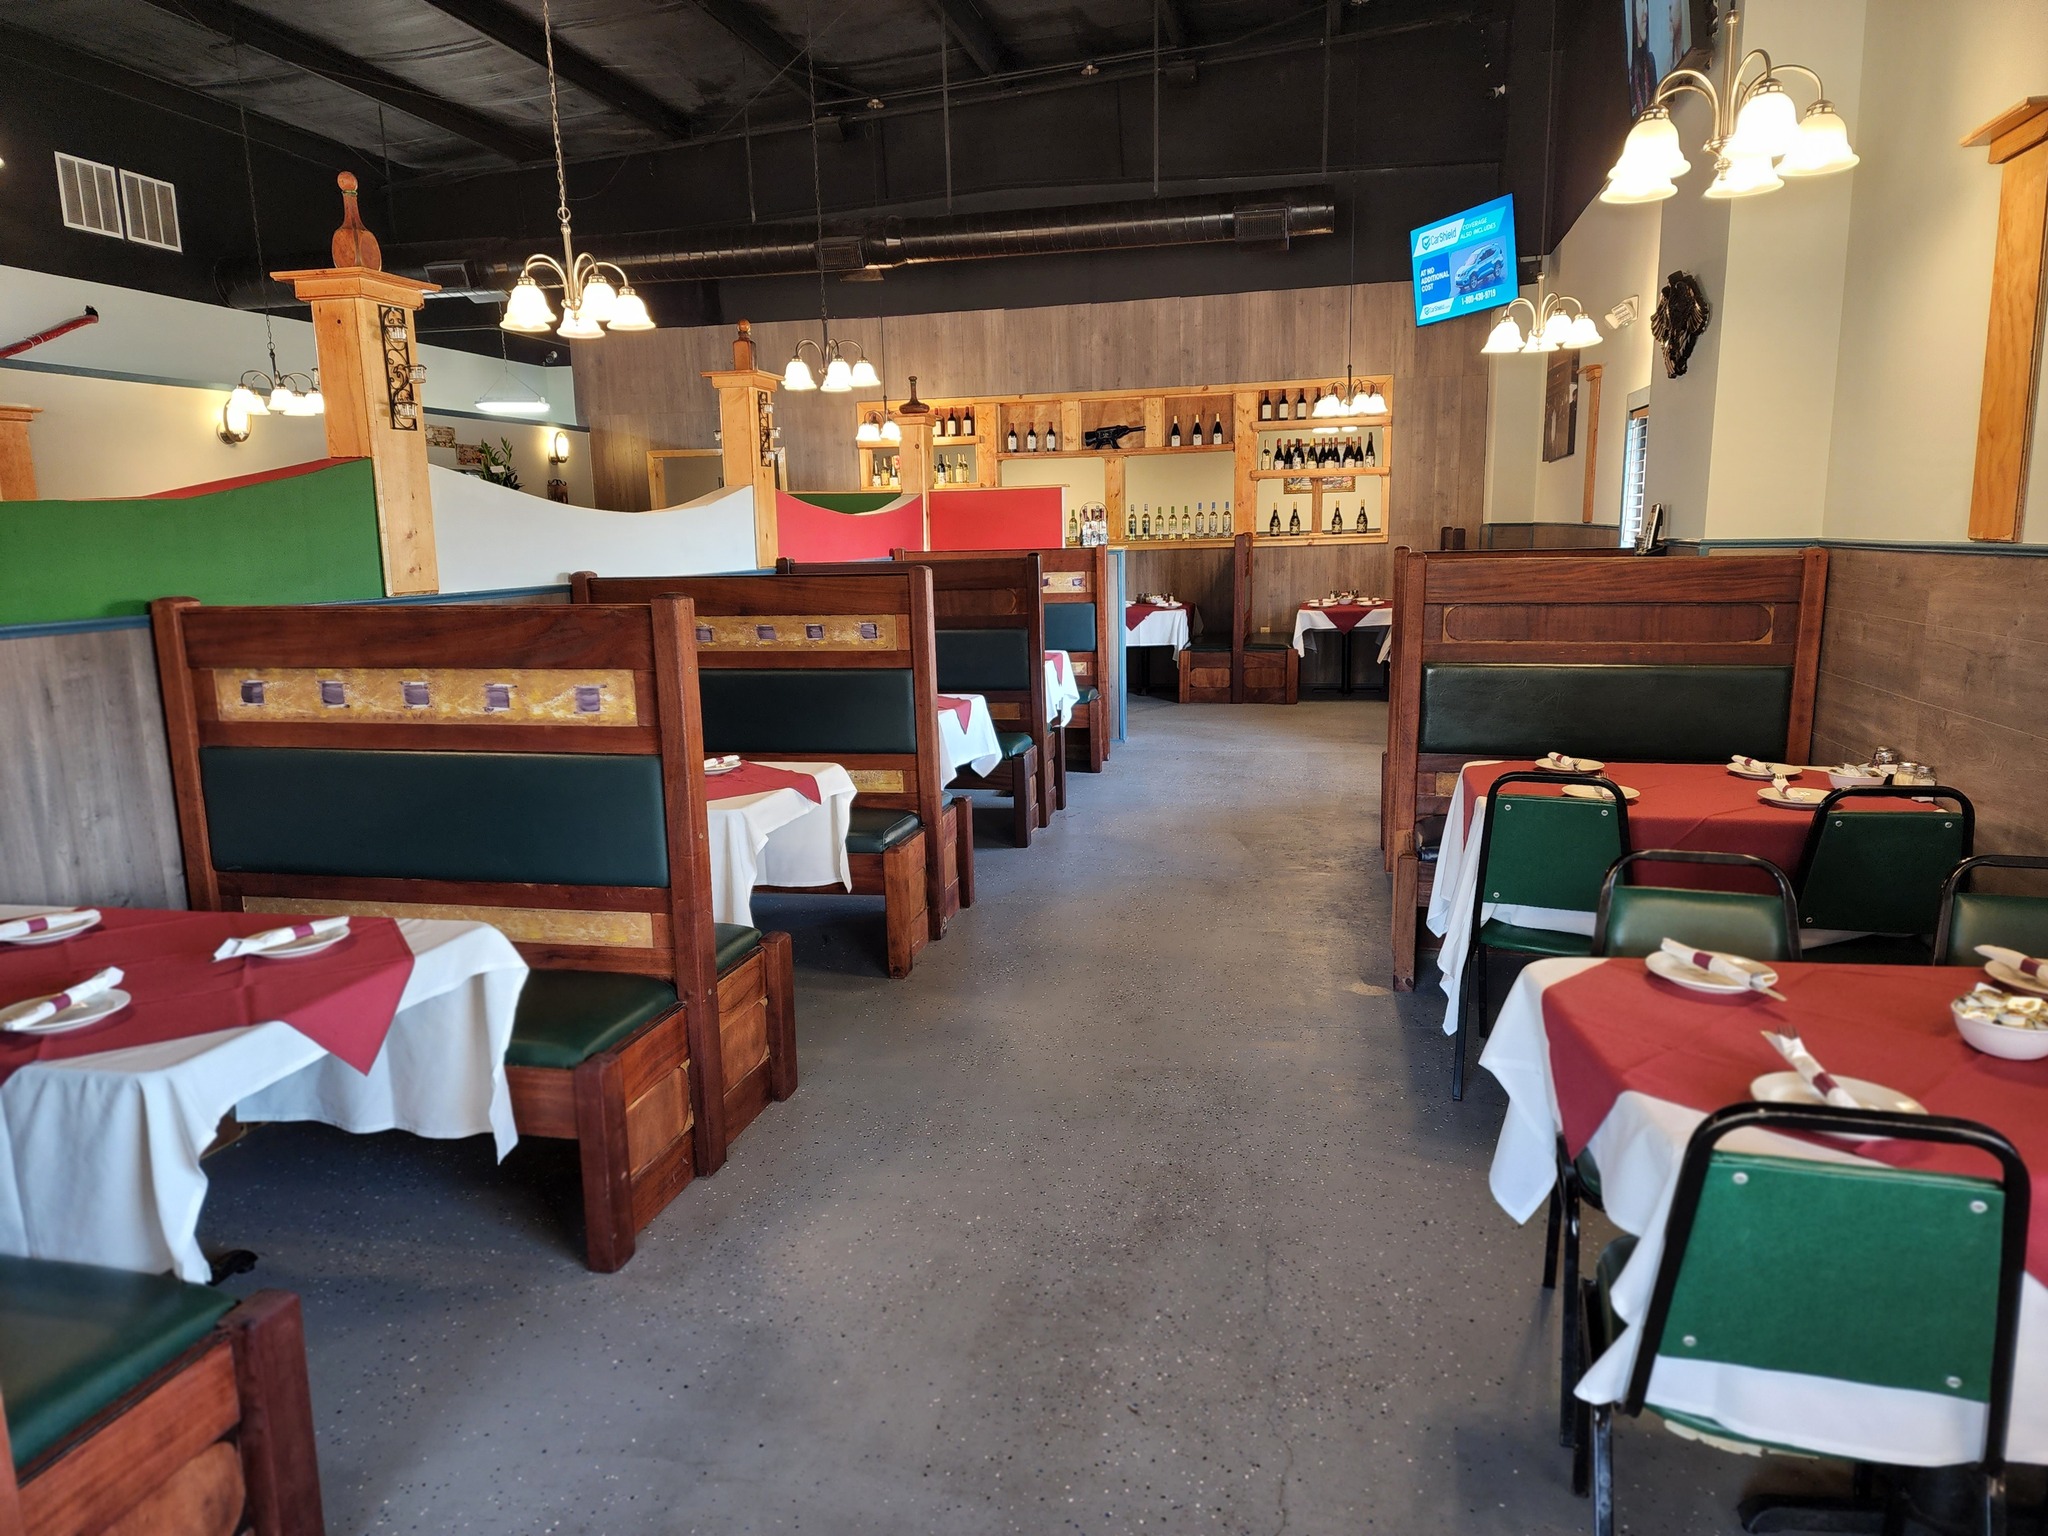 Mario's Italian Restaurant & Bar